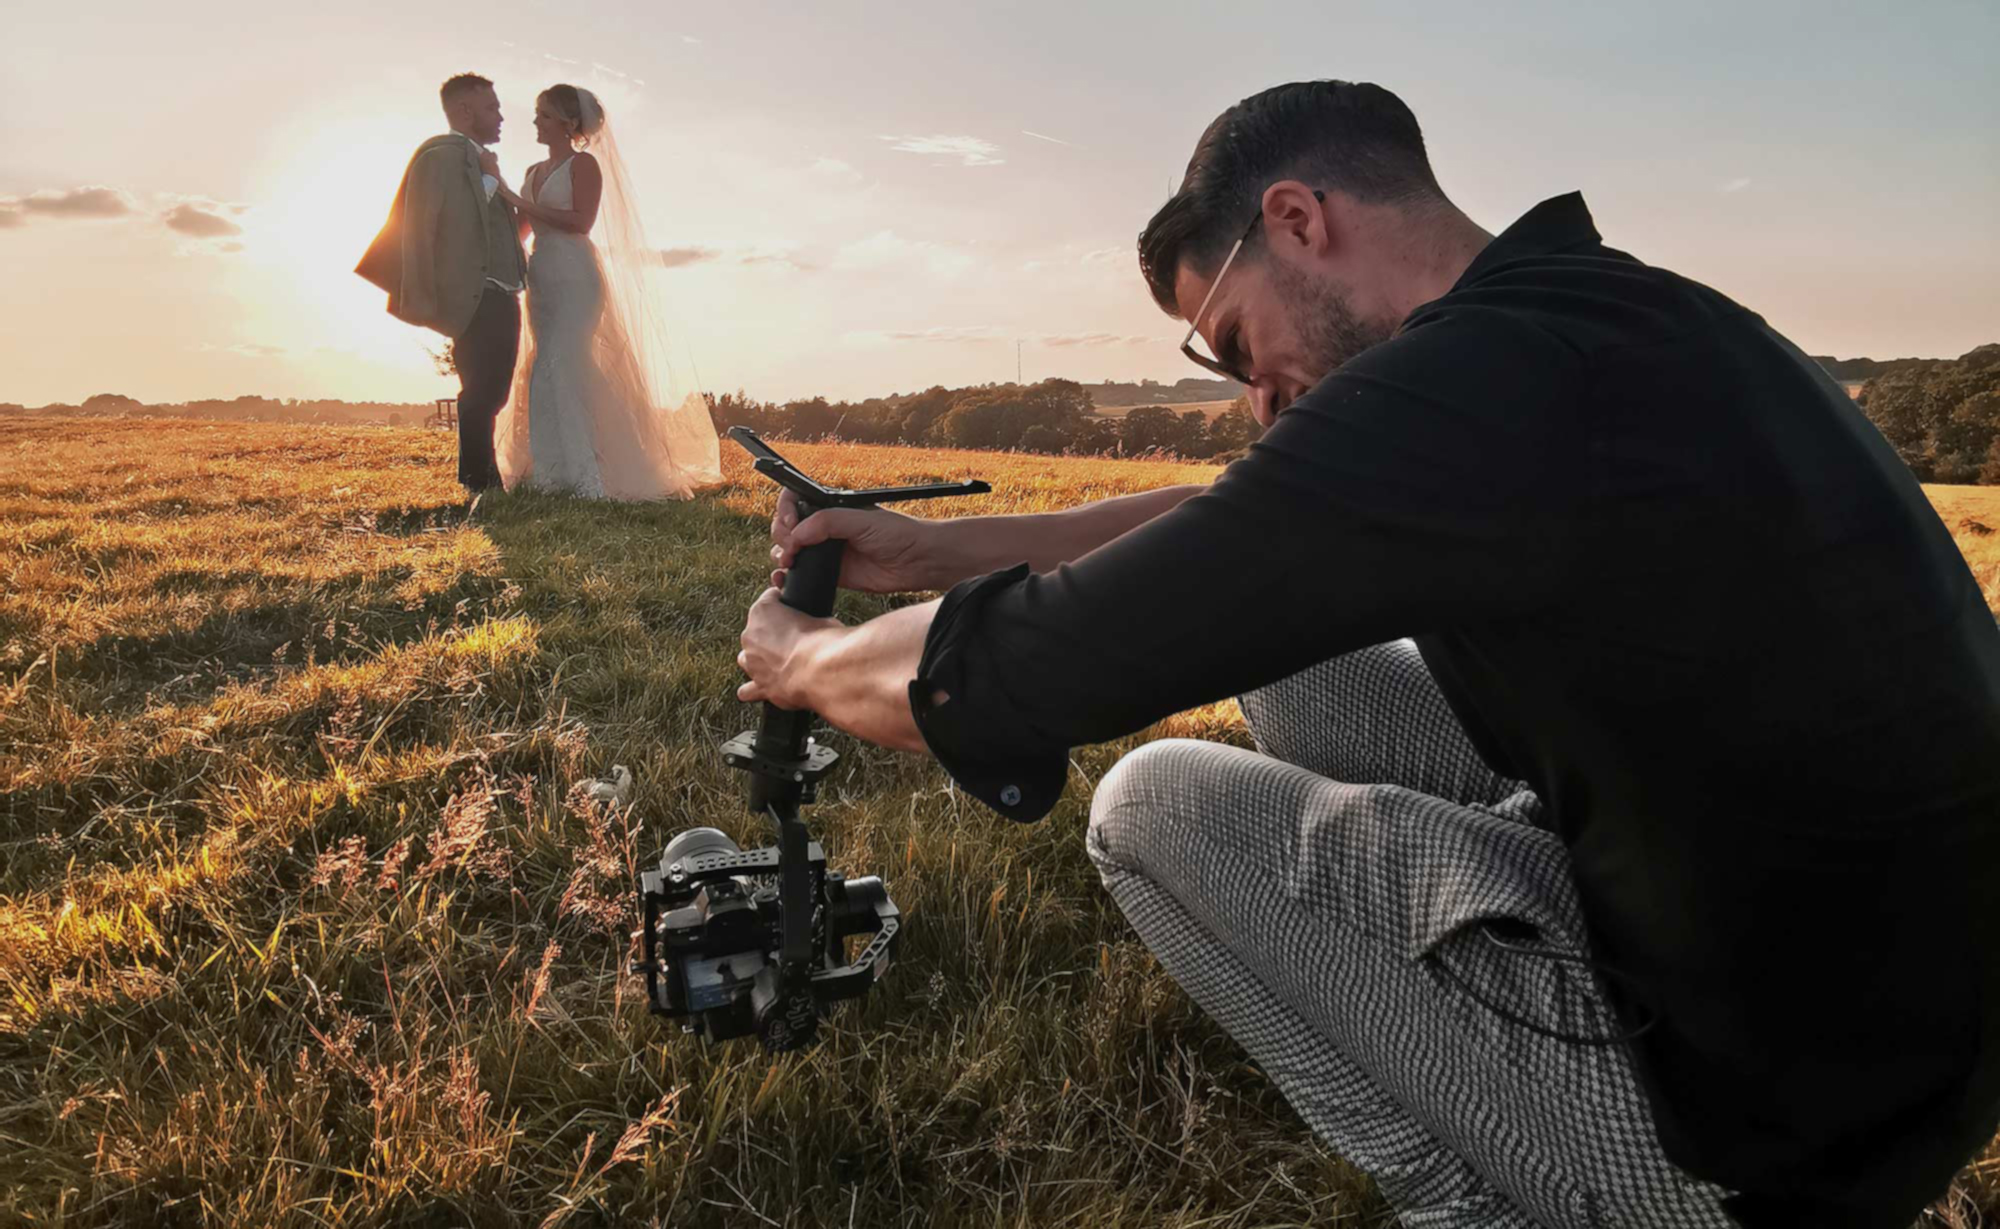 Wedding Video Services